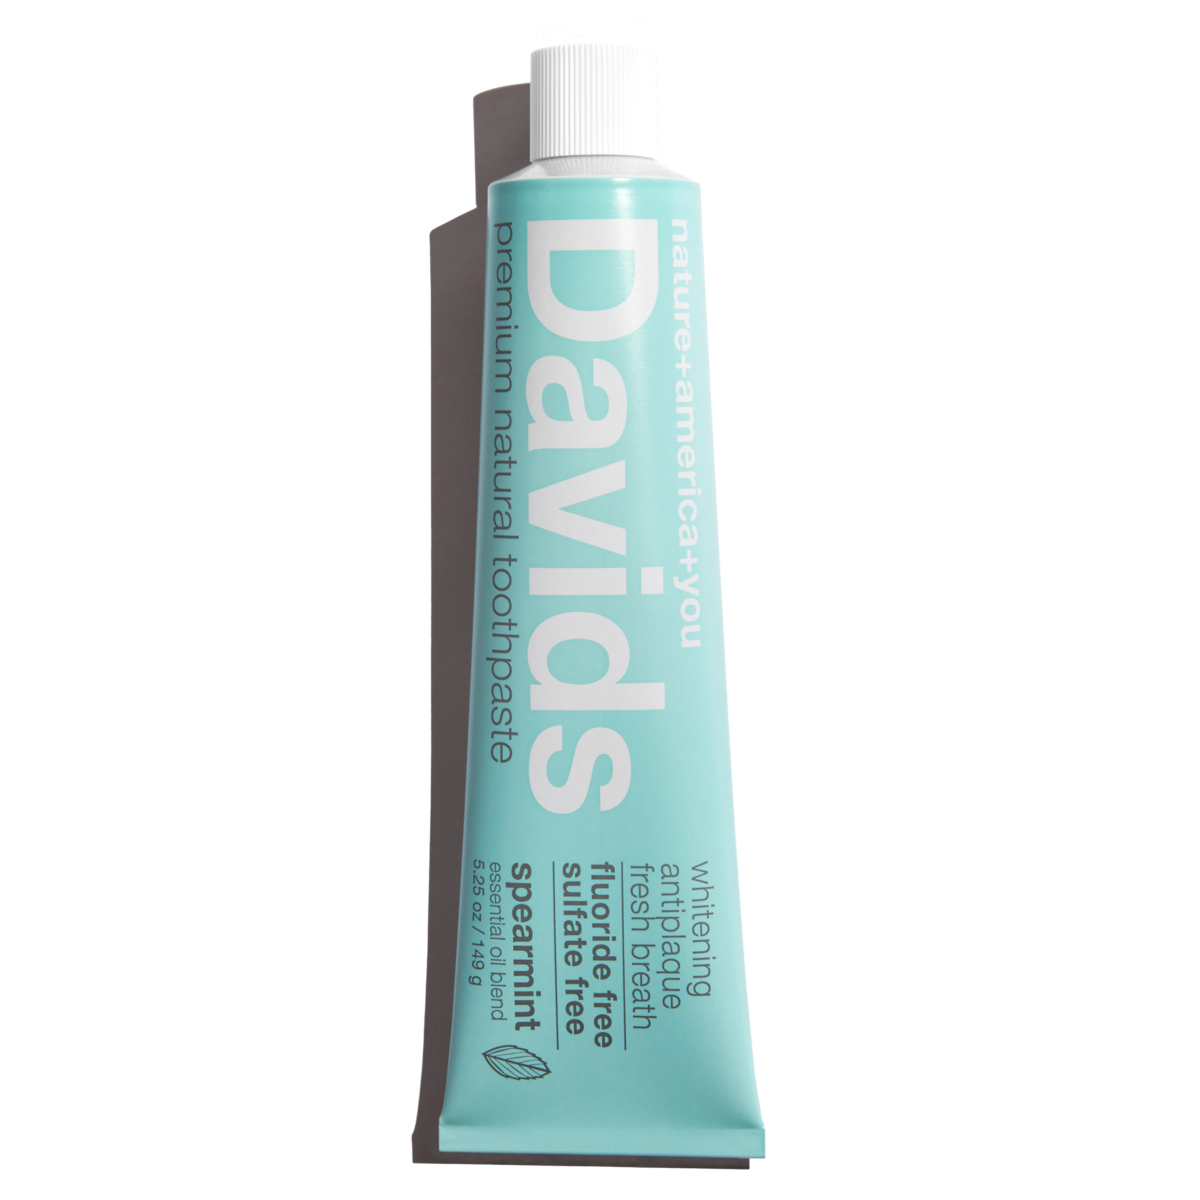 Davids Toothpaste | spearmint